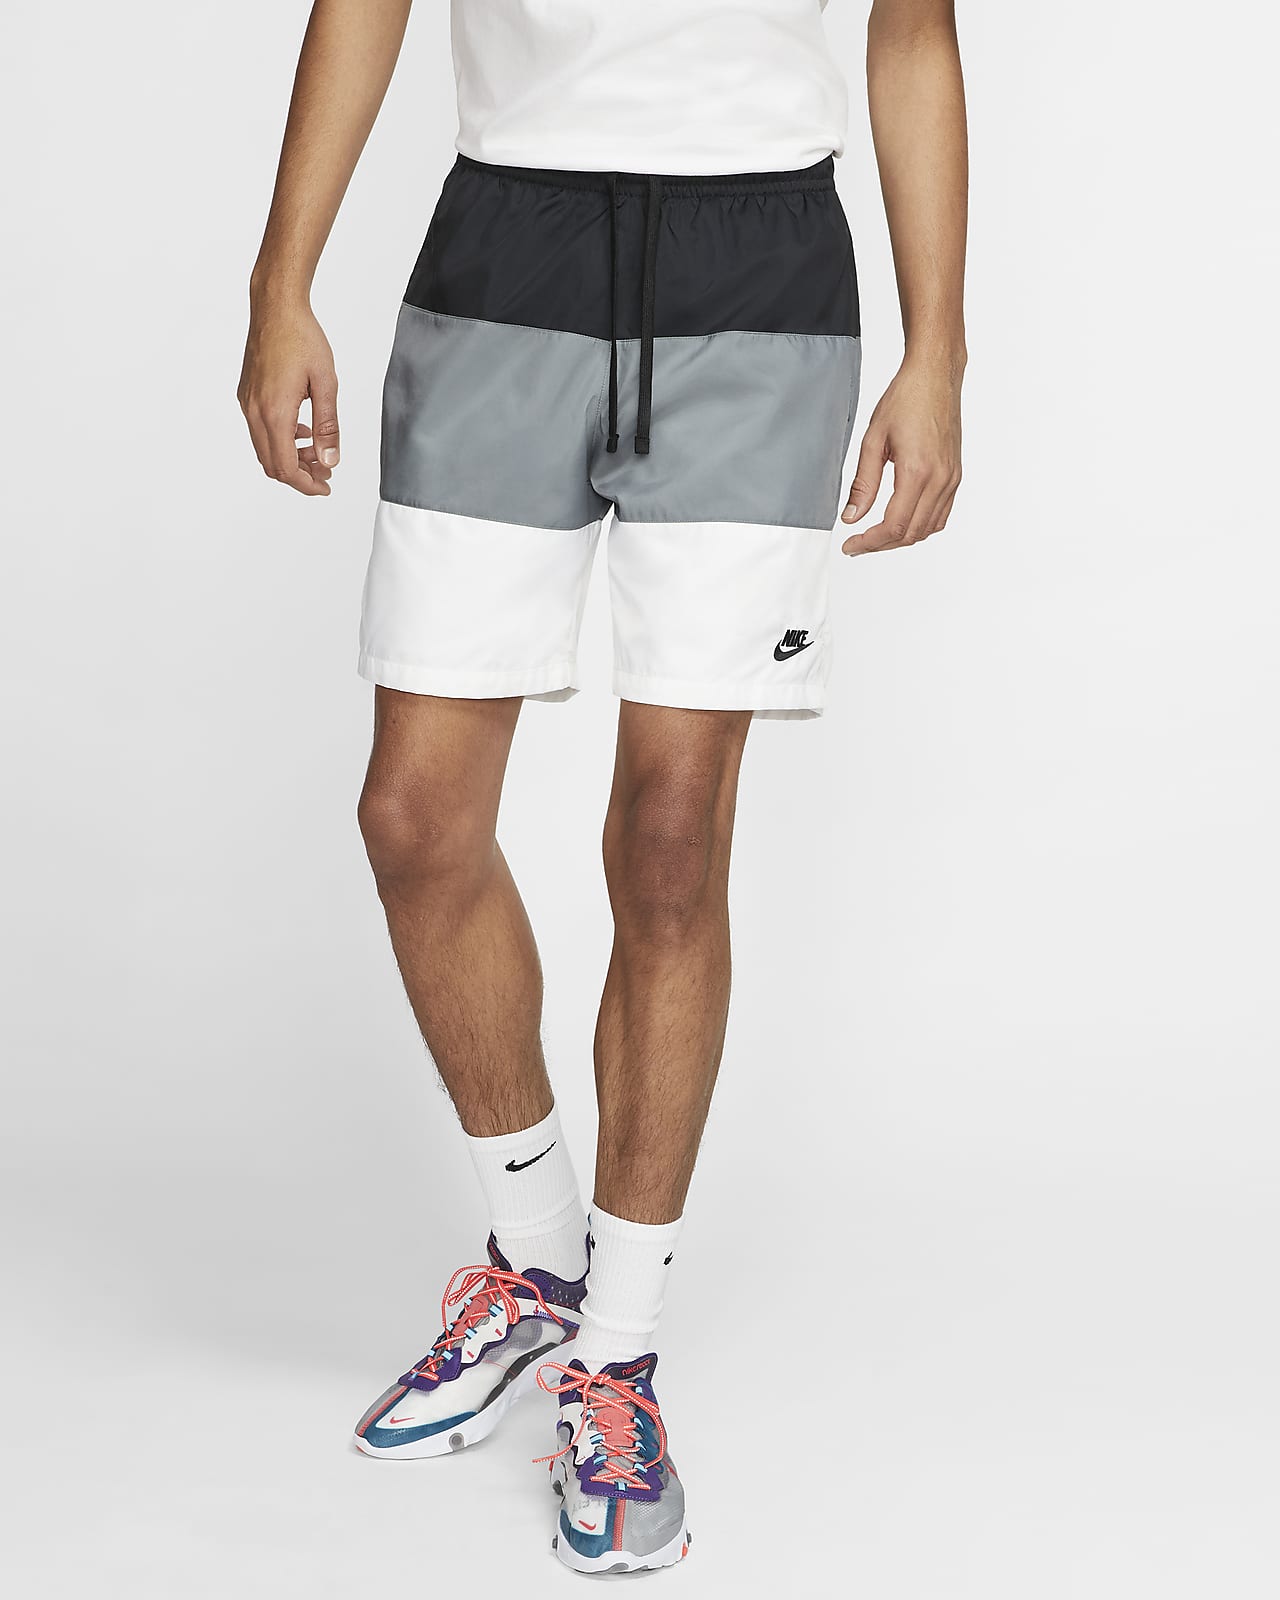 Shorts de tejido Woven para hombre Nike Sportswear City Edition. Nike.com